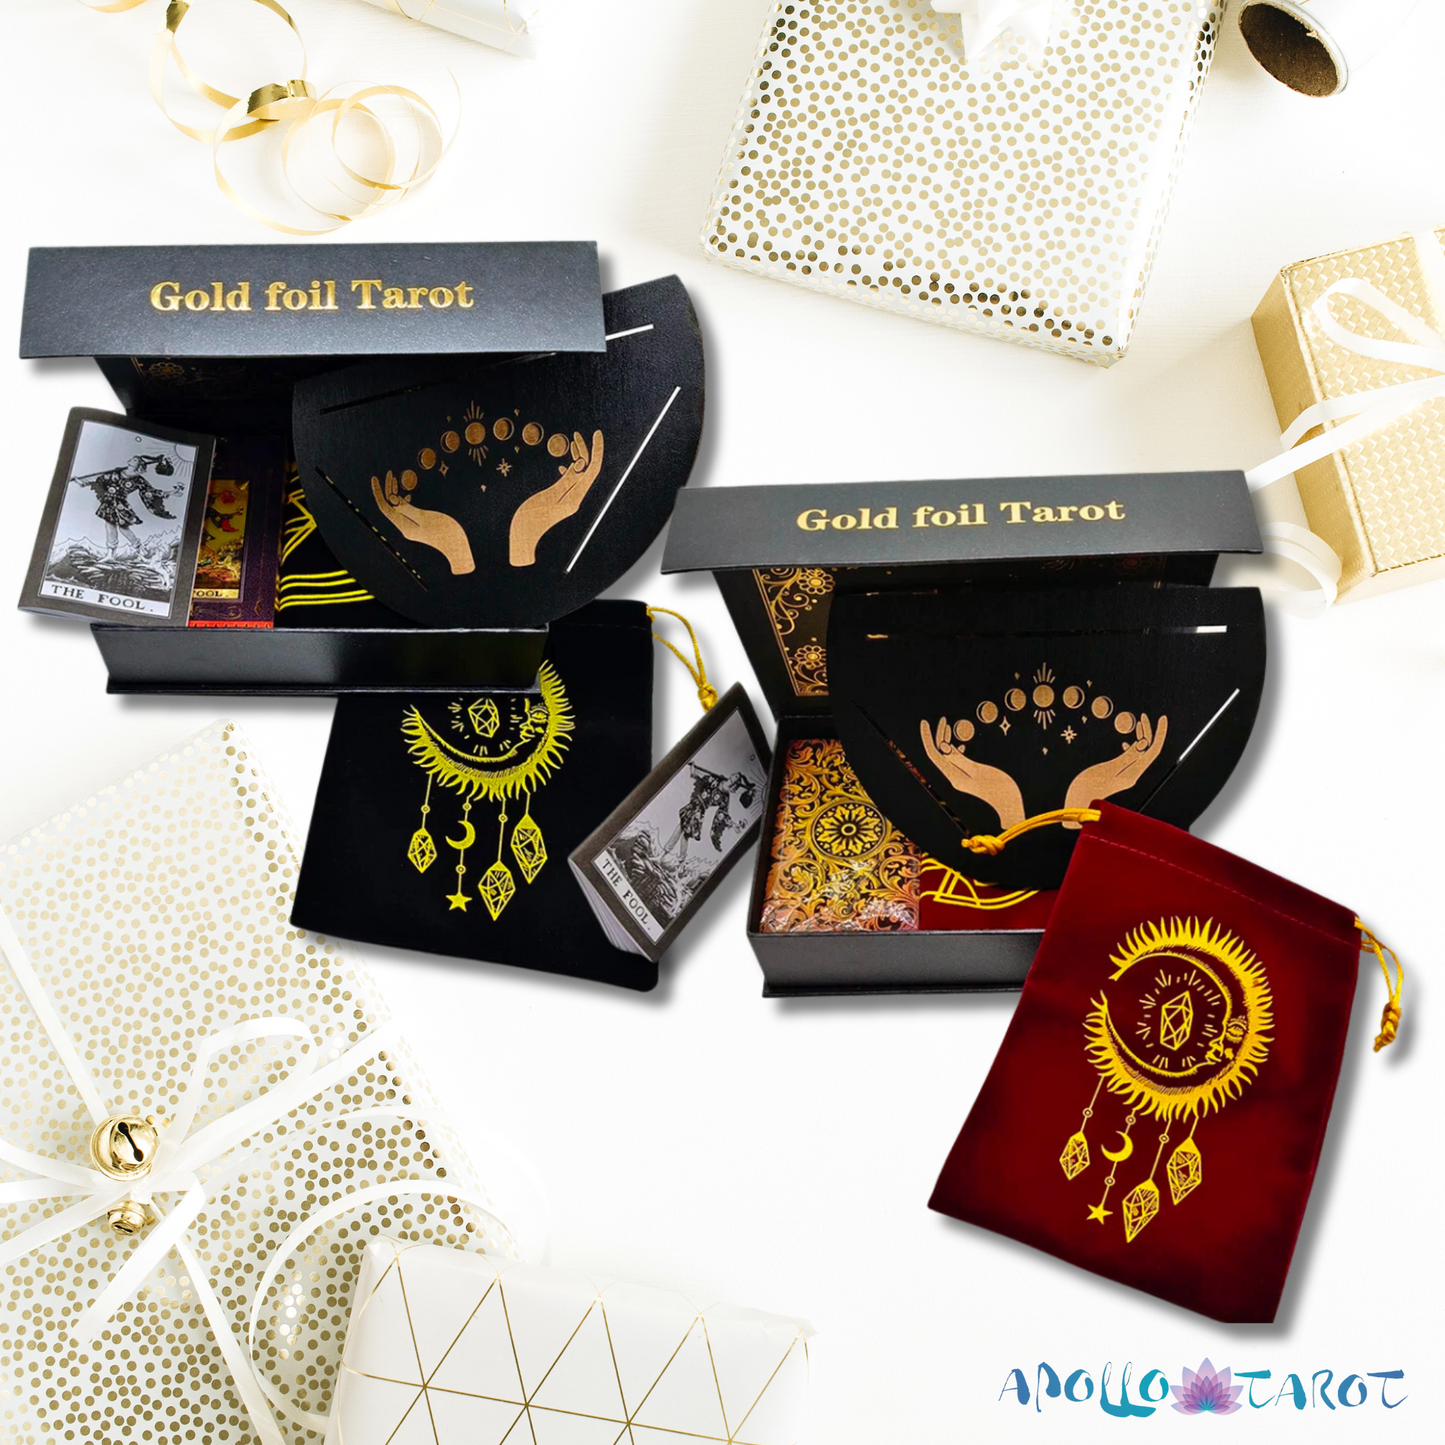 Gold Foil Tarot Cards Deck Premium Gift Box • Classic Waite Plastic Tear-Resistant Card + Velvet Bag + Wood Stand + Guidebook Divination Set • Apollo Tarot Shop